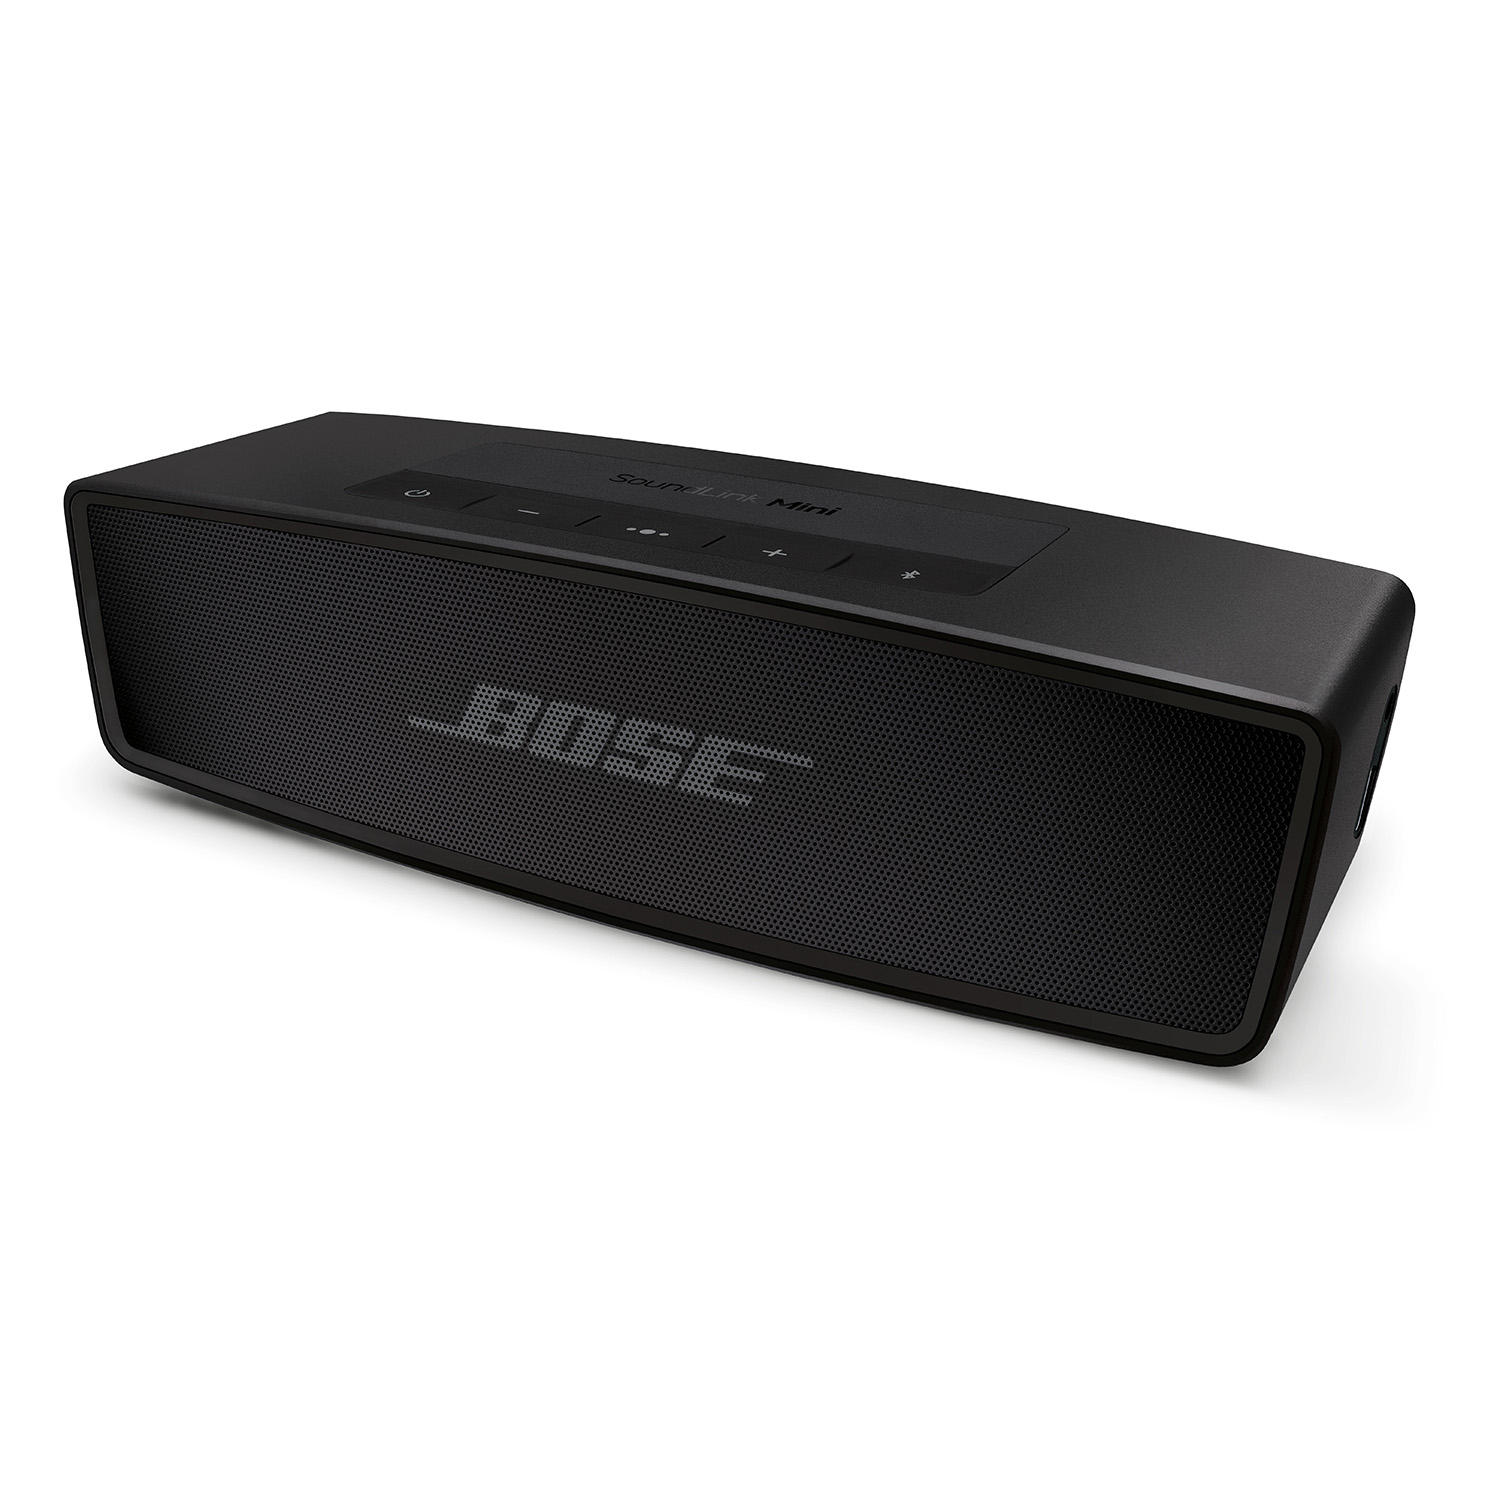 Bose SoundLink Mini II Special Edition Speaker only $99.00